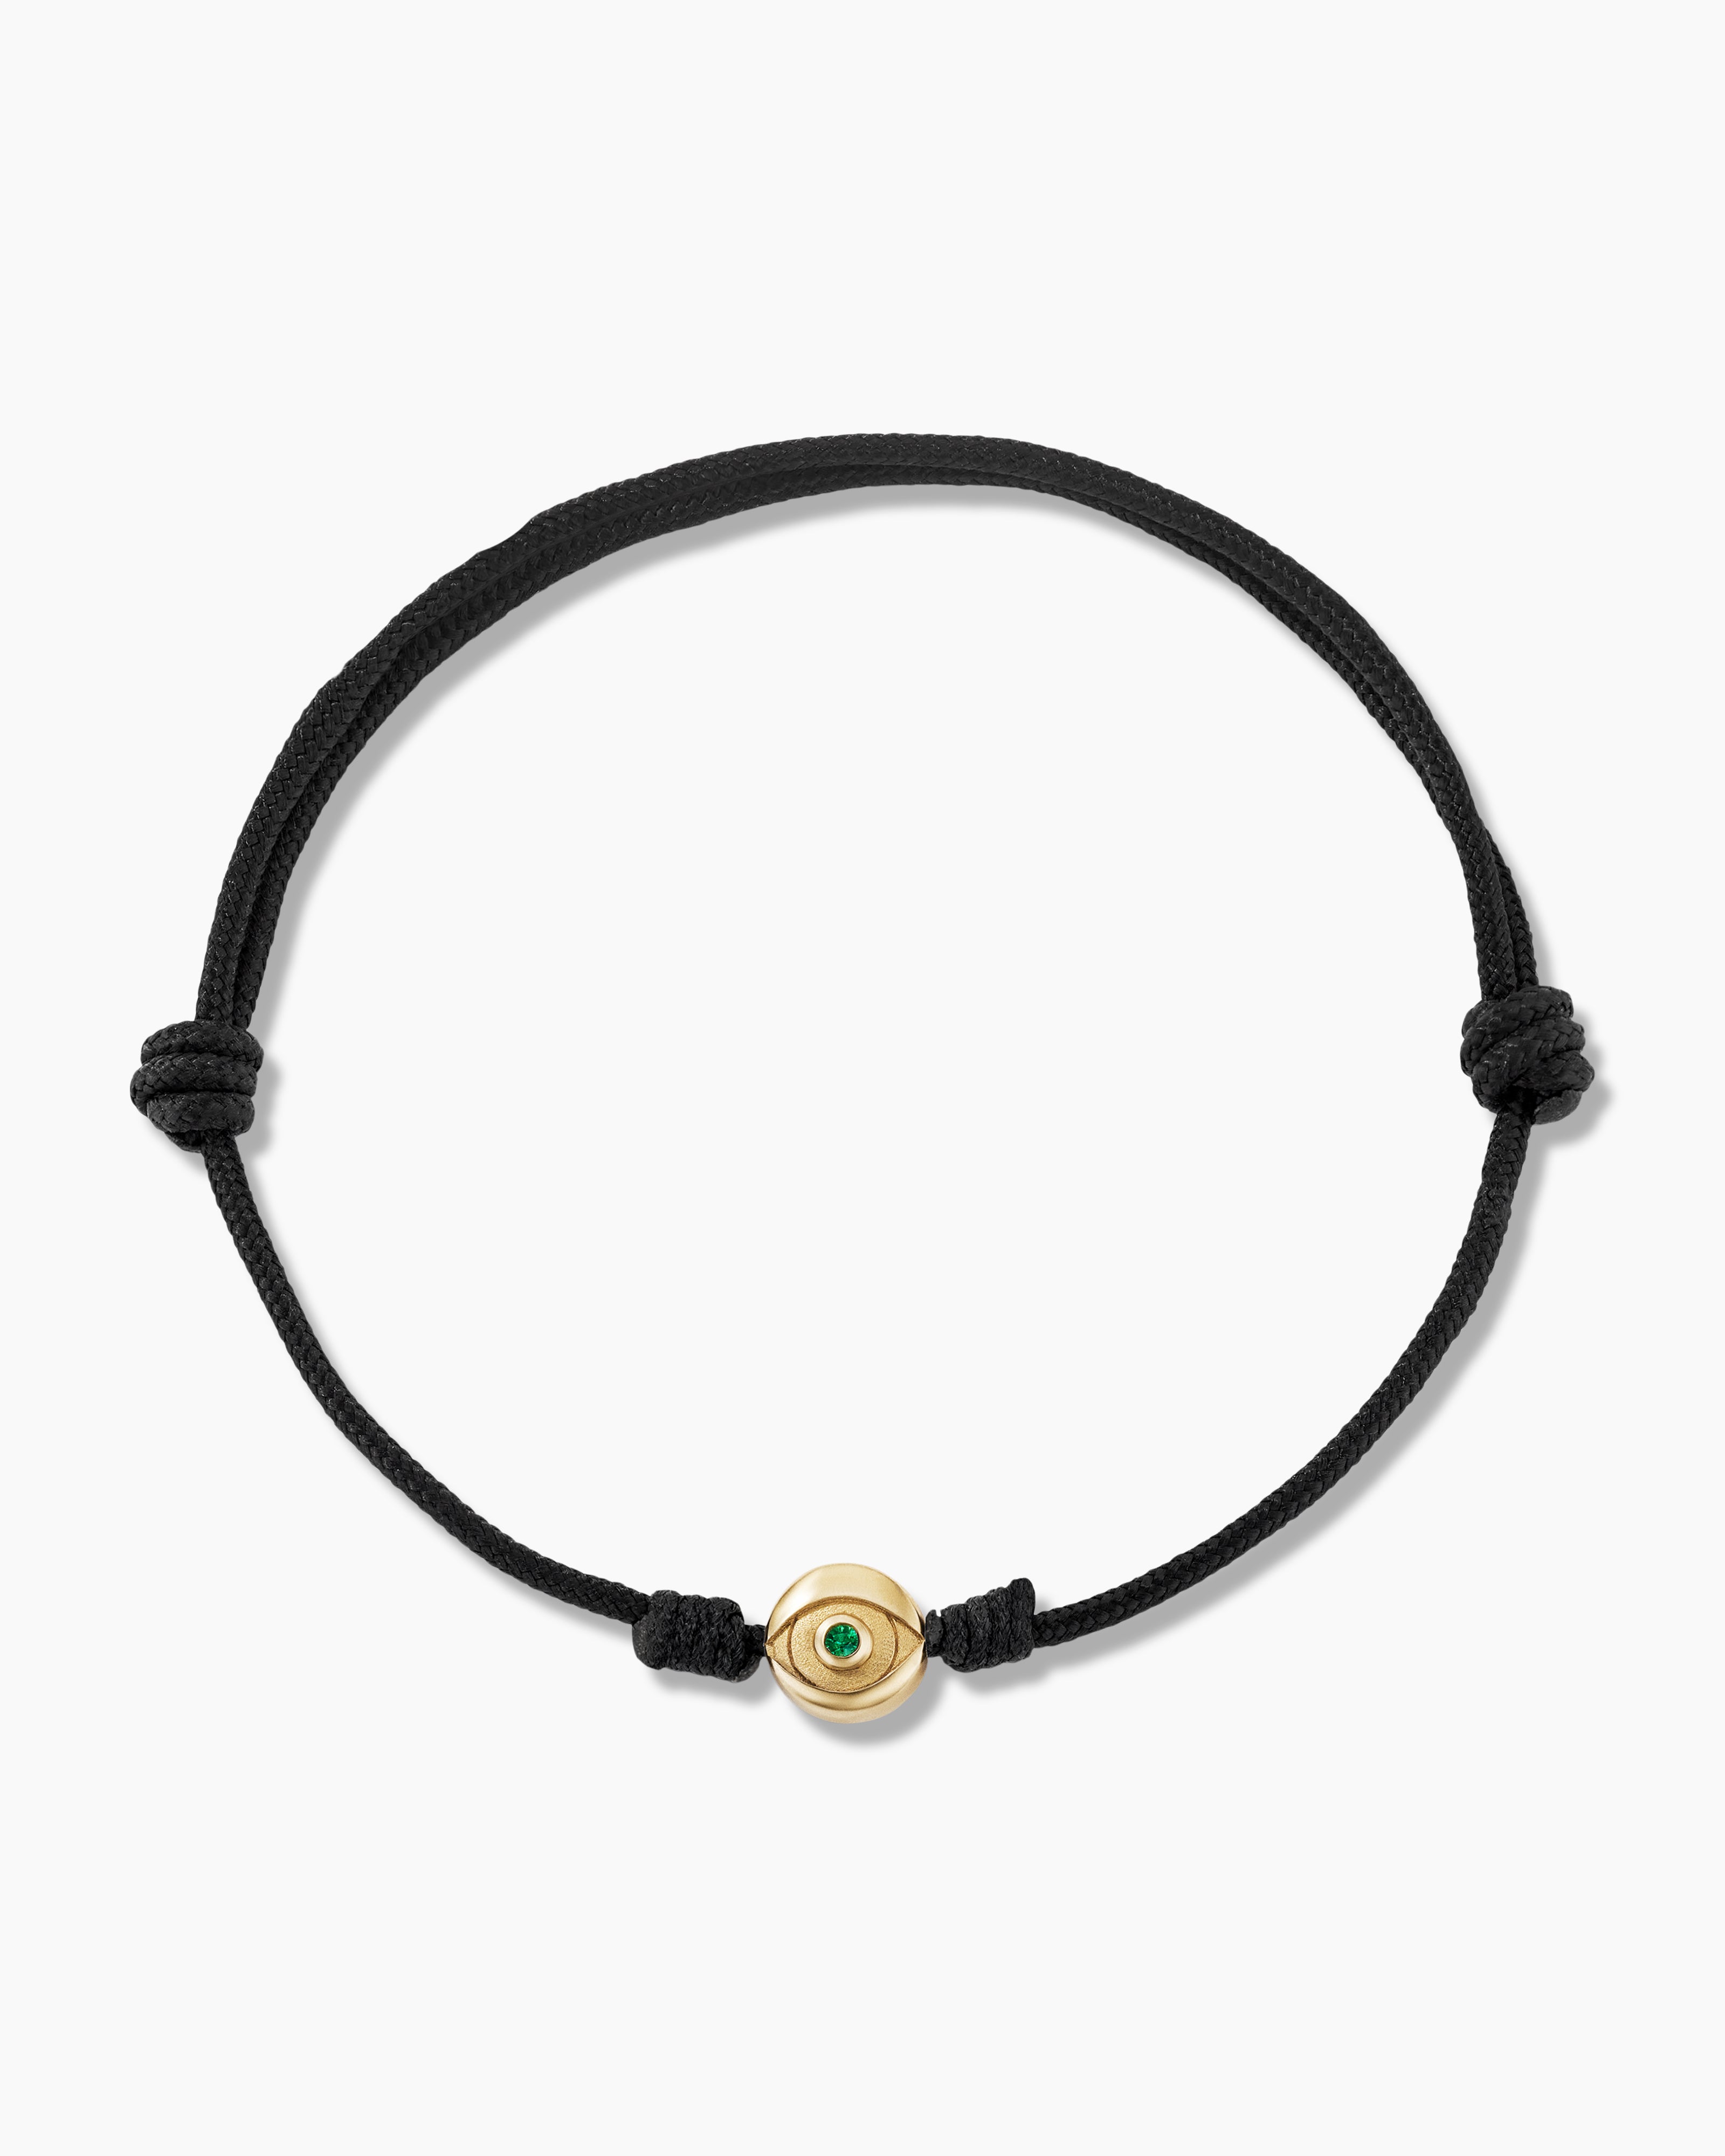 David Yurman Men's Evil Eye Black Cord Bracelet with 18K Yellow Gold and Emerald - Medium